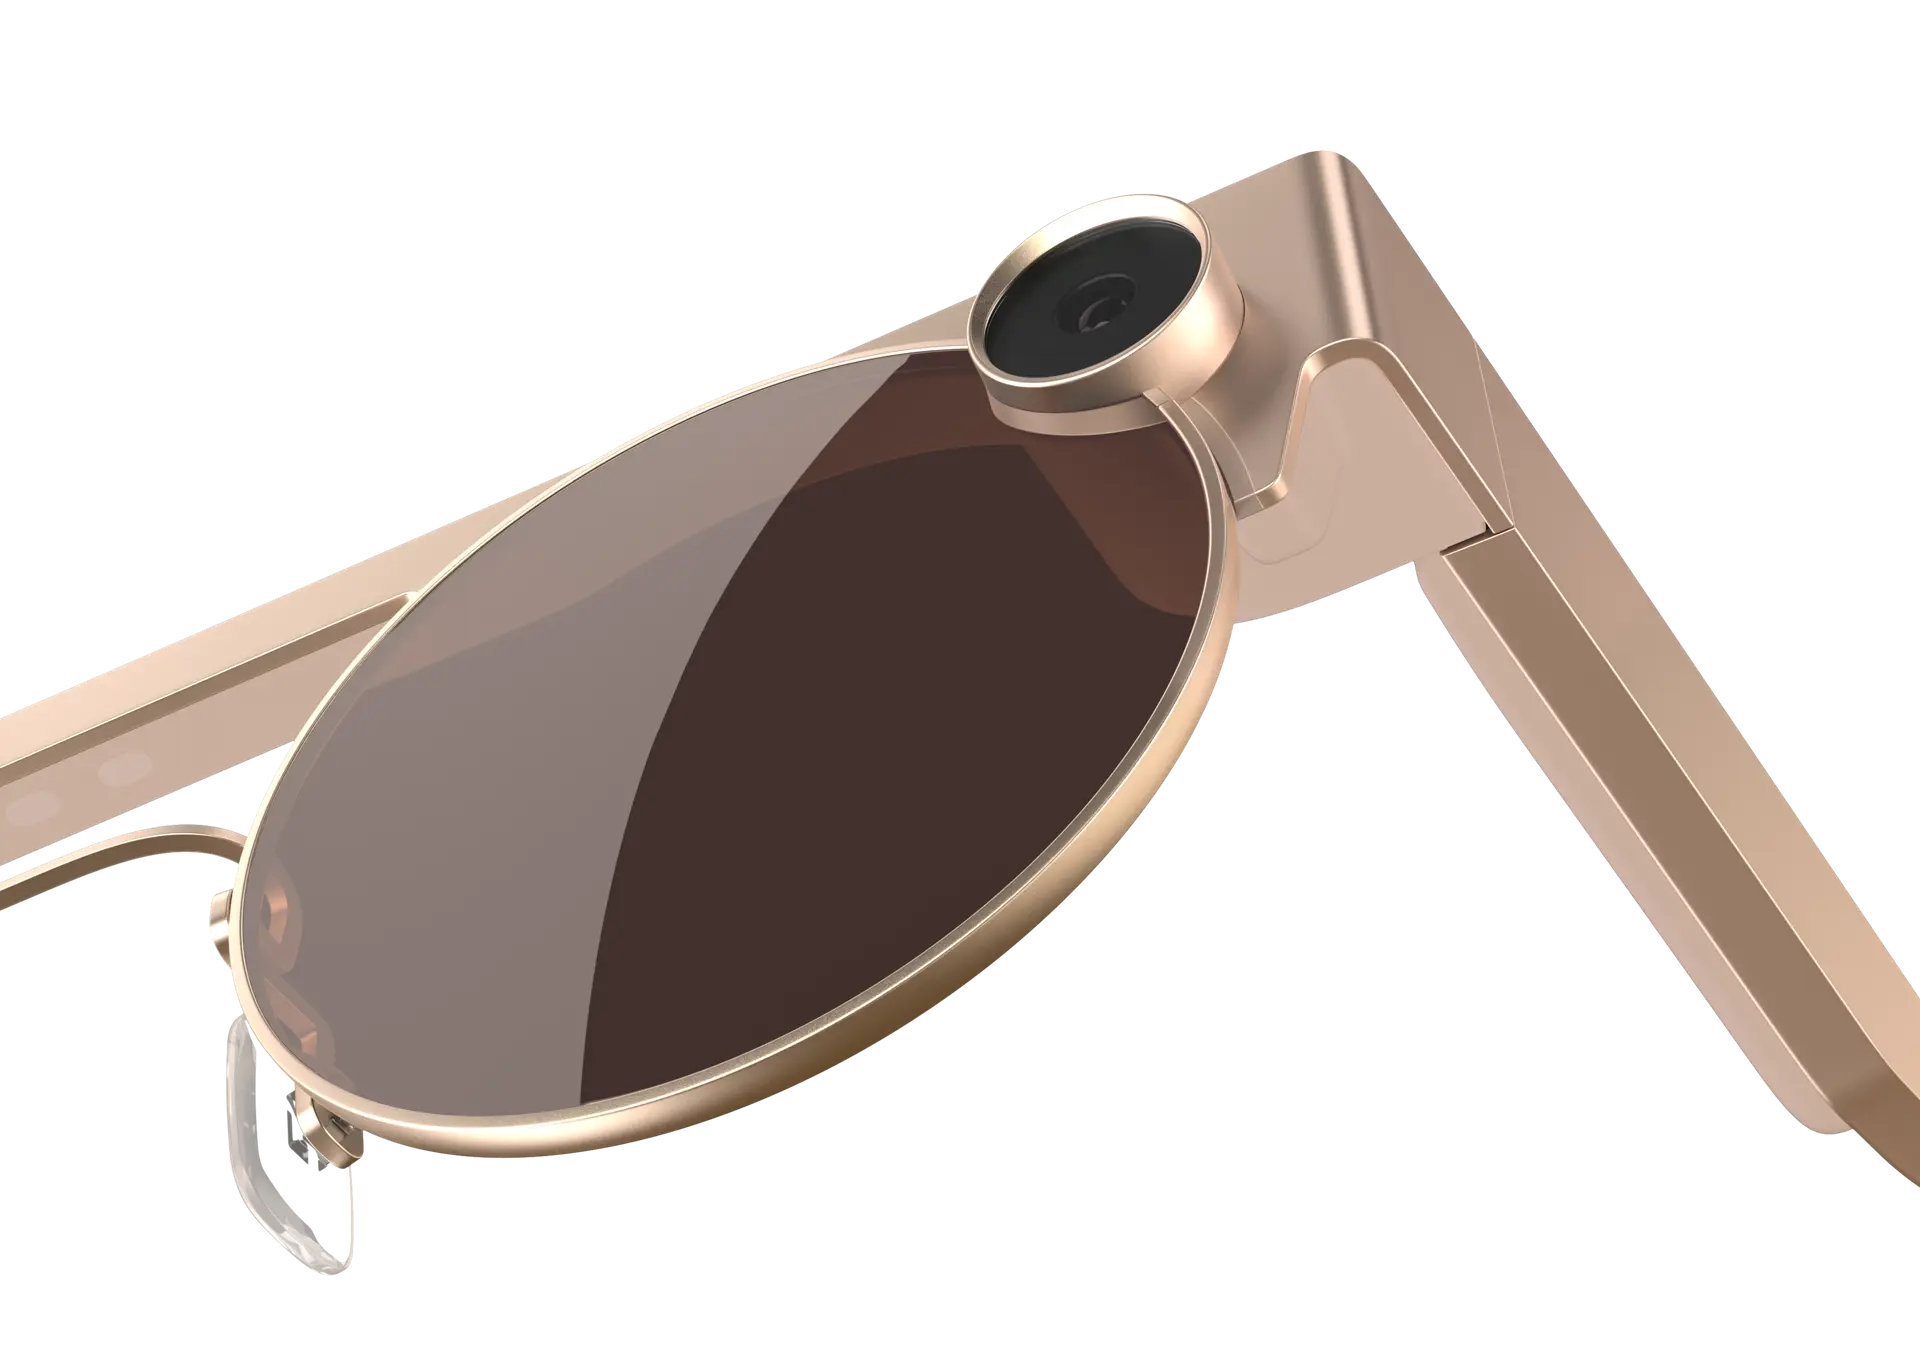 Julbo Sunglasses Store for REACTIV, Performance, Goggles & Mountain